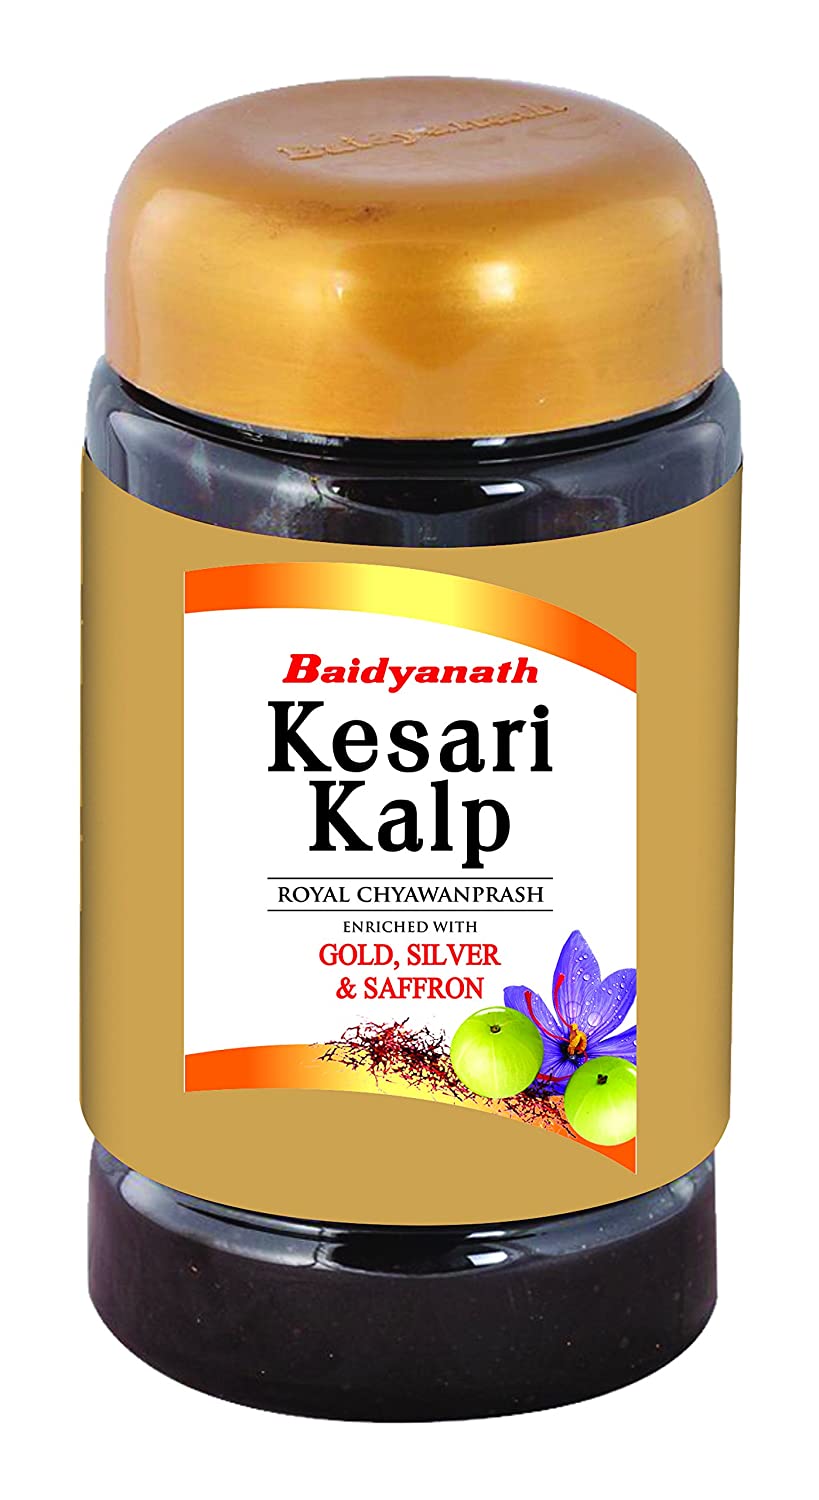 Baidyanath Kesari Kalp Royal Best Chyawanprash Brands In India